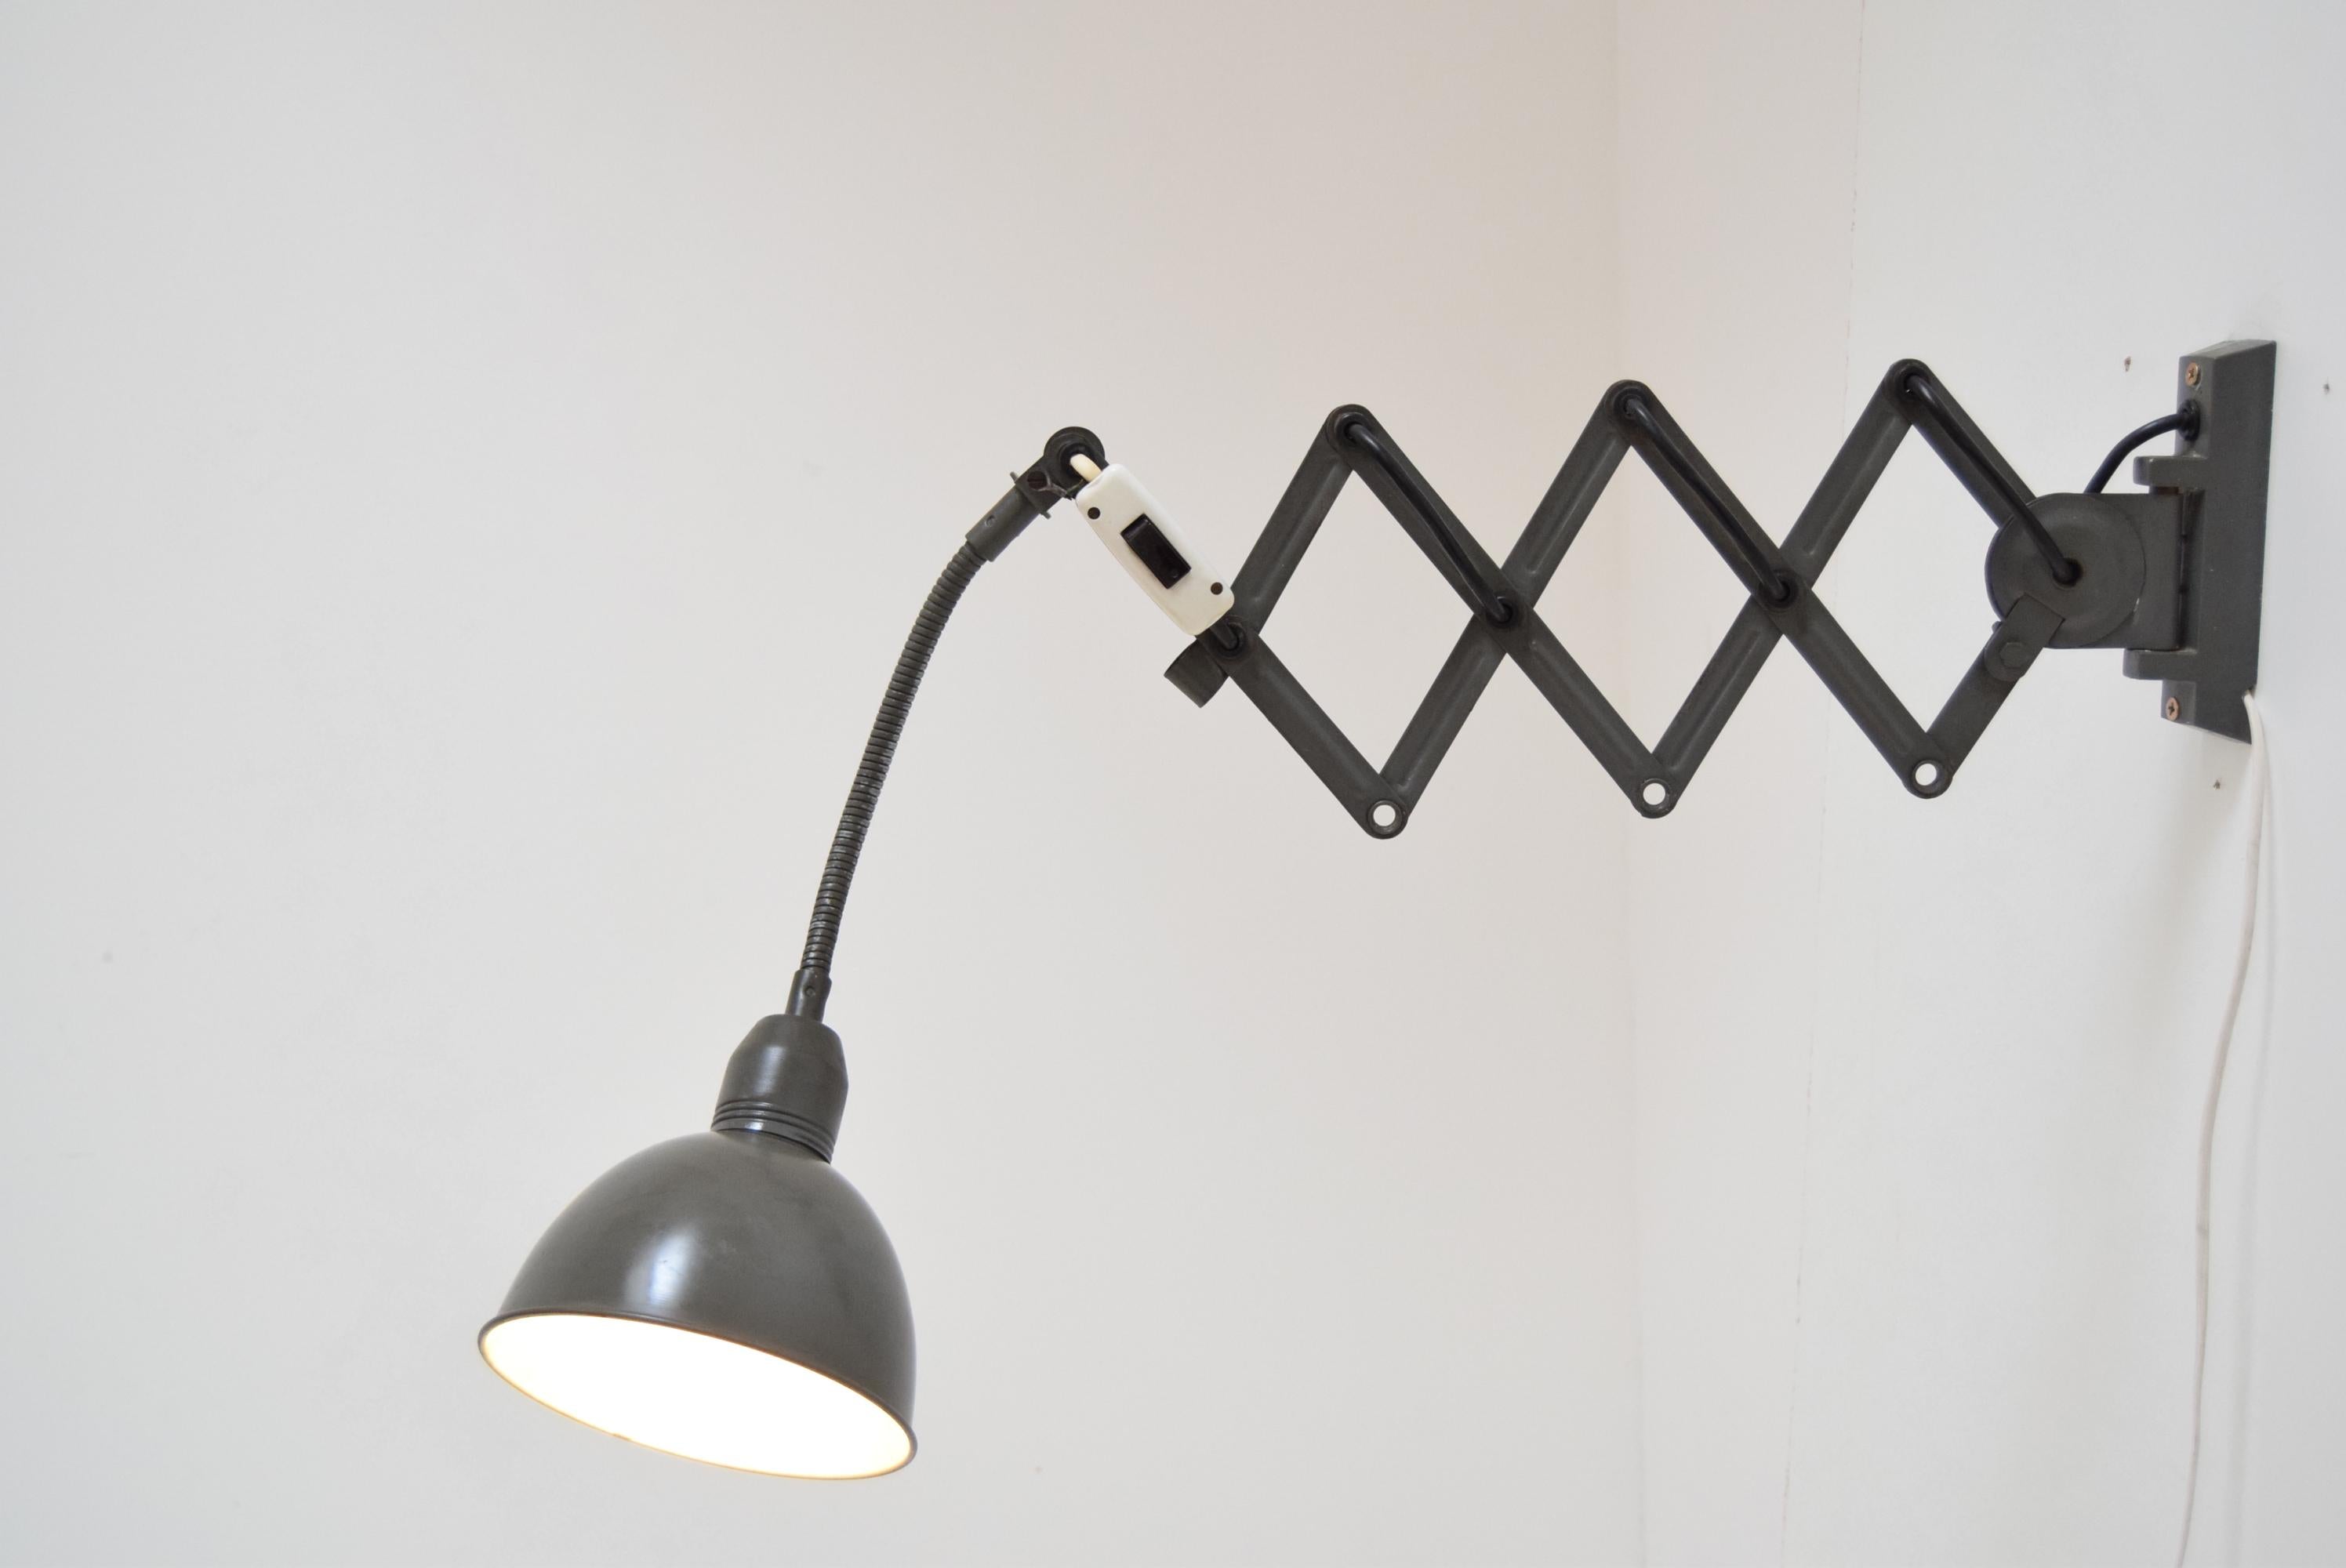 Czech Adjustable Industrial Wall Lamp, Instala Decin, 1960’s For Sale